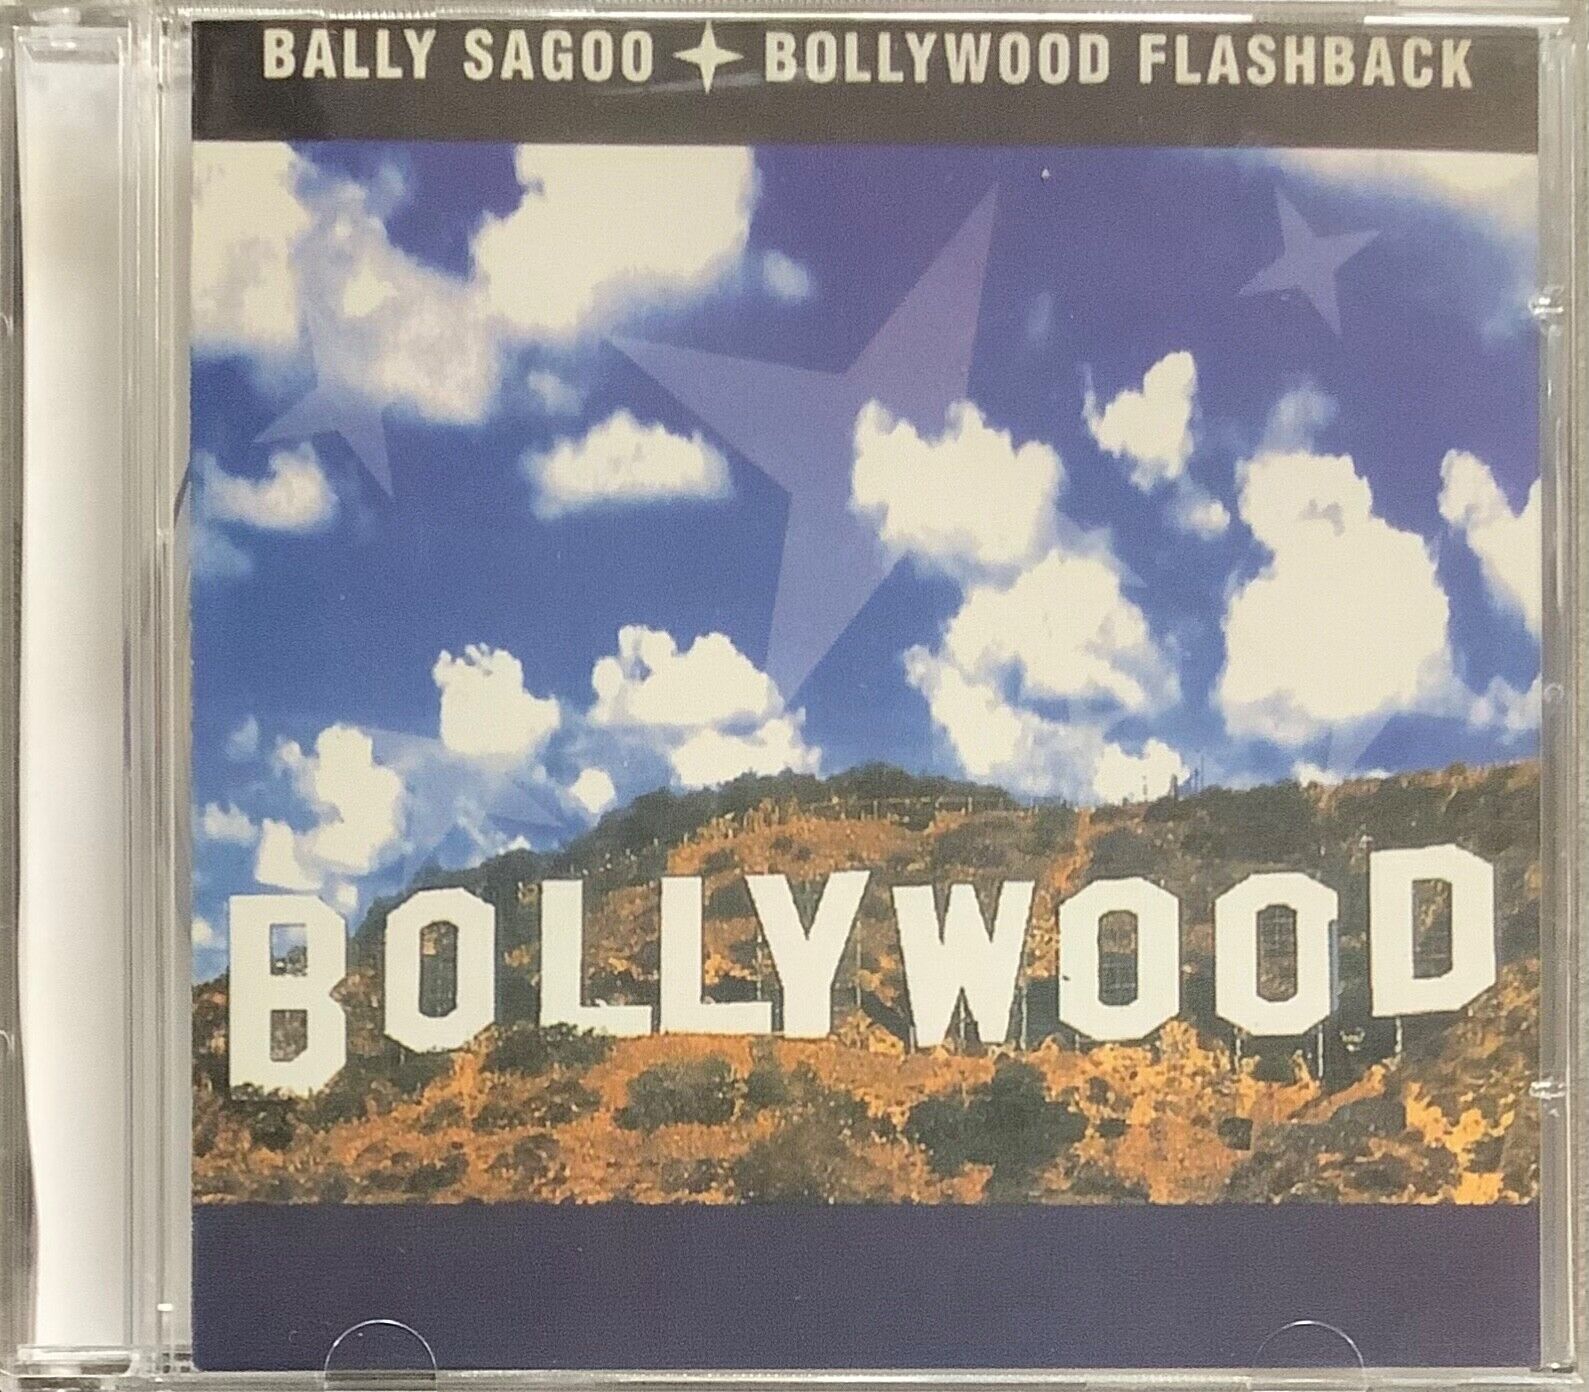 Bollywood Flashback By Bally Sagoo - Bhangra CD